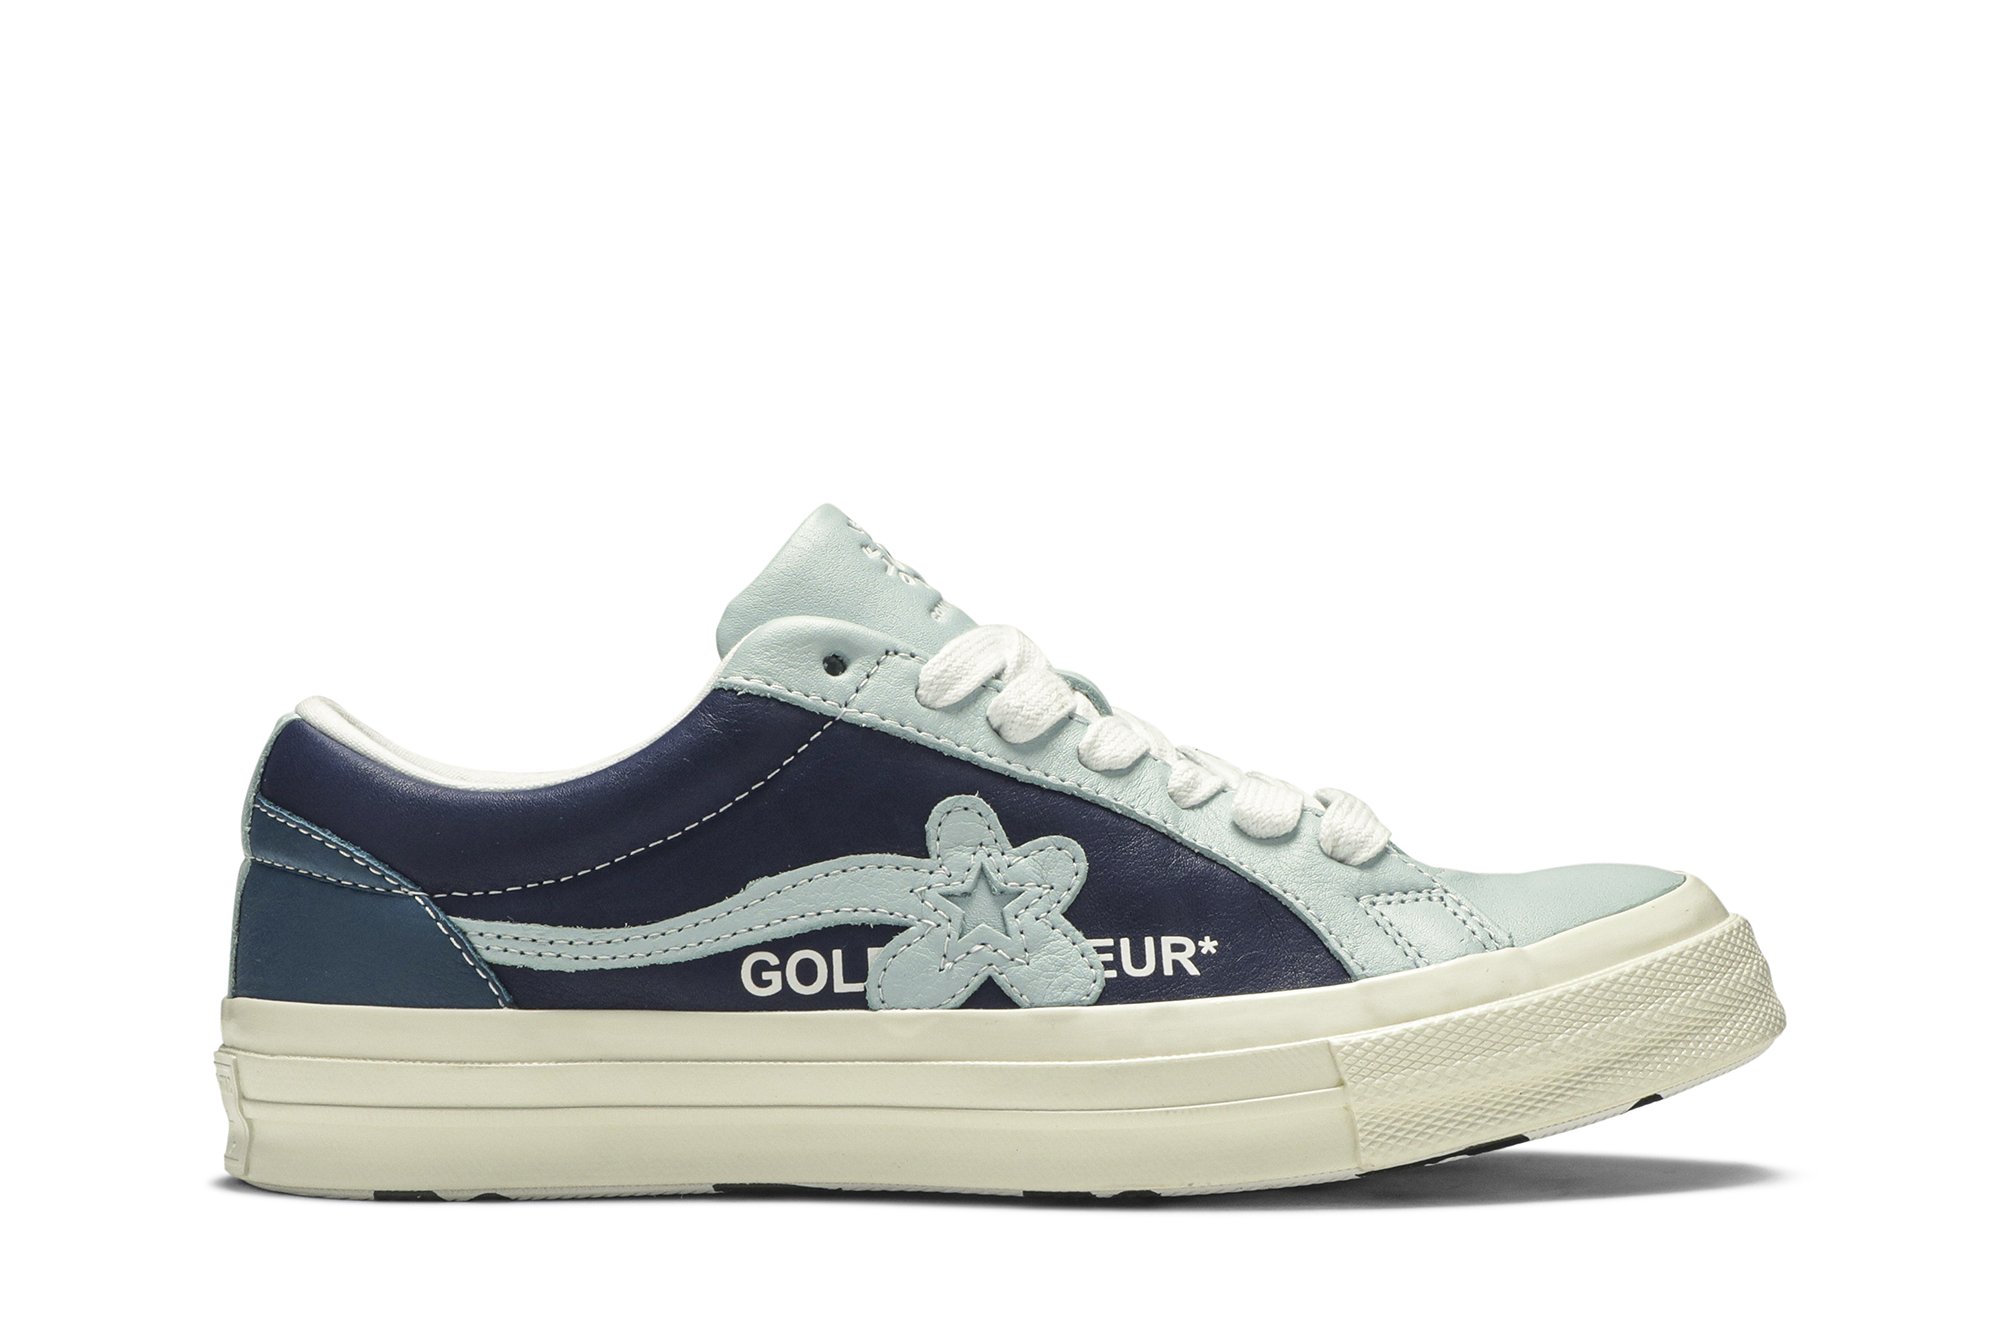 Golf Le Fleur x One Star Ox 'Industrial Pack - Blue'